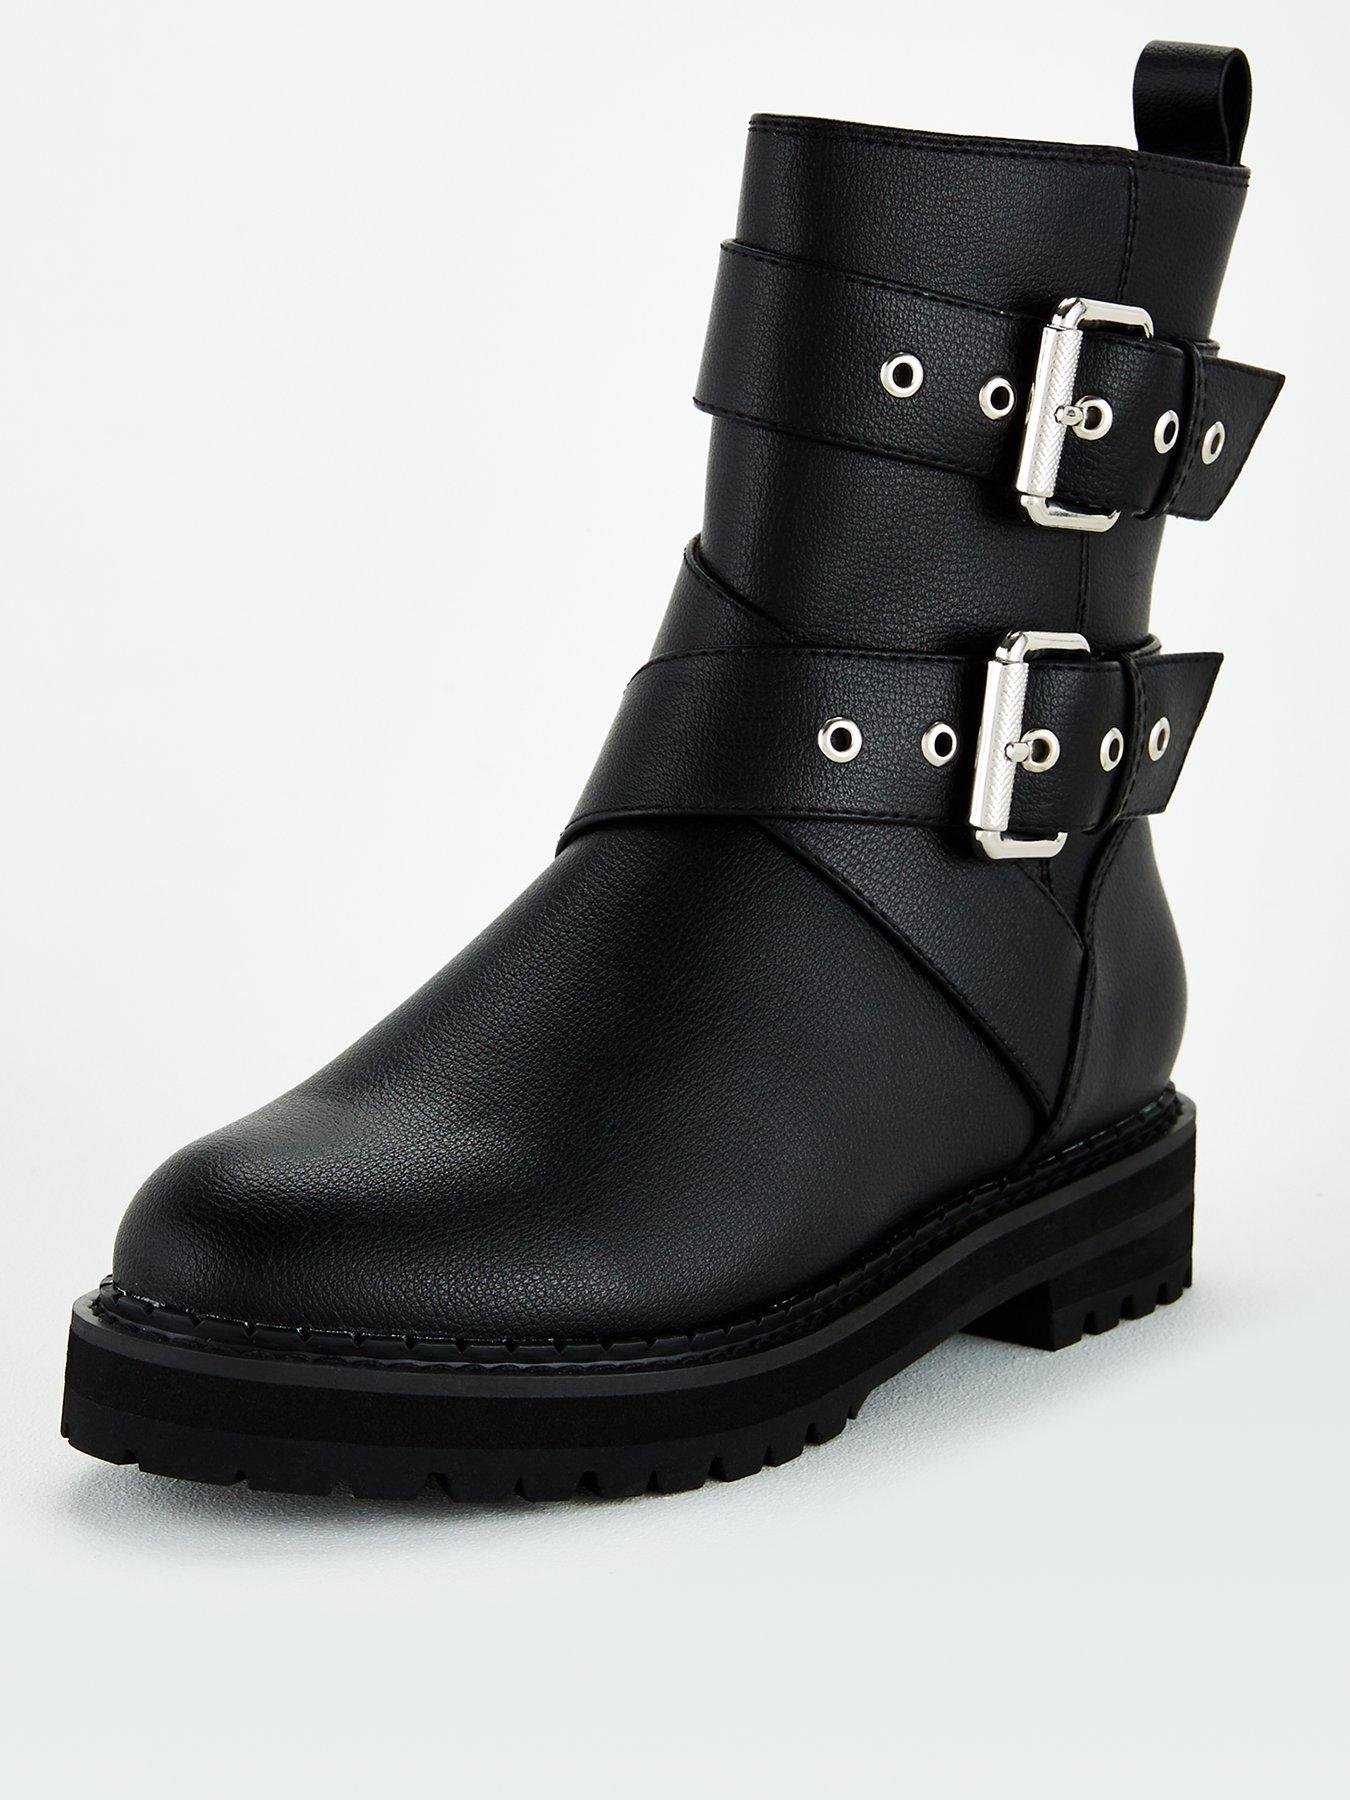 leather black boots ladies